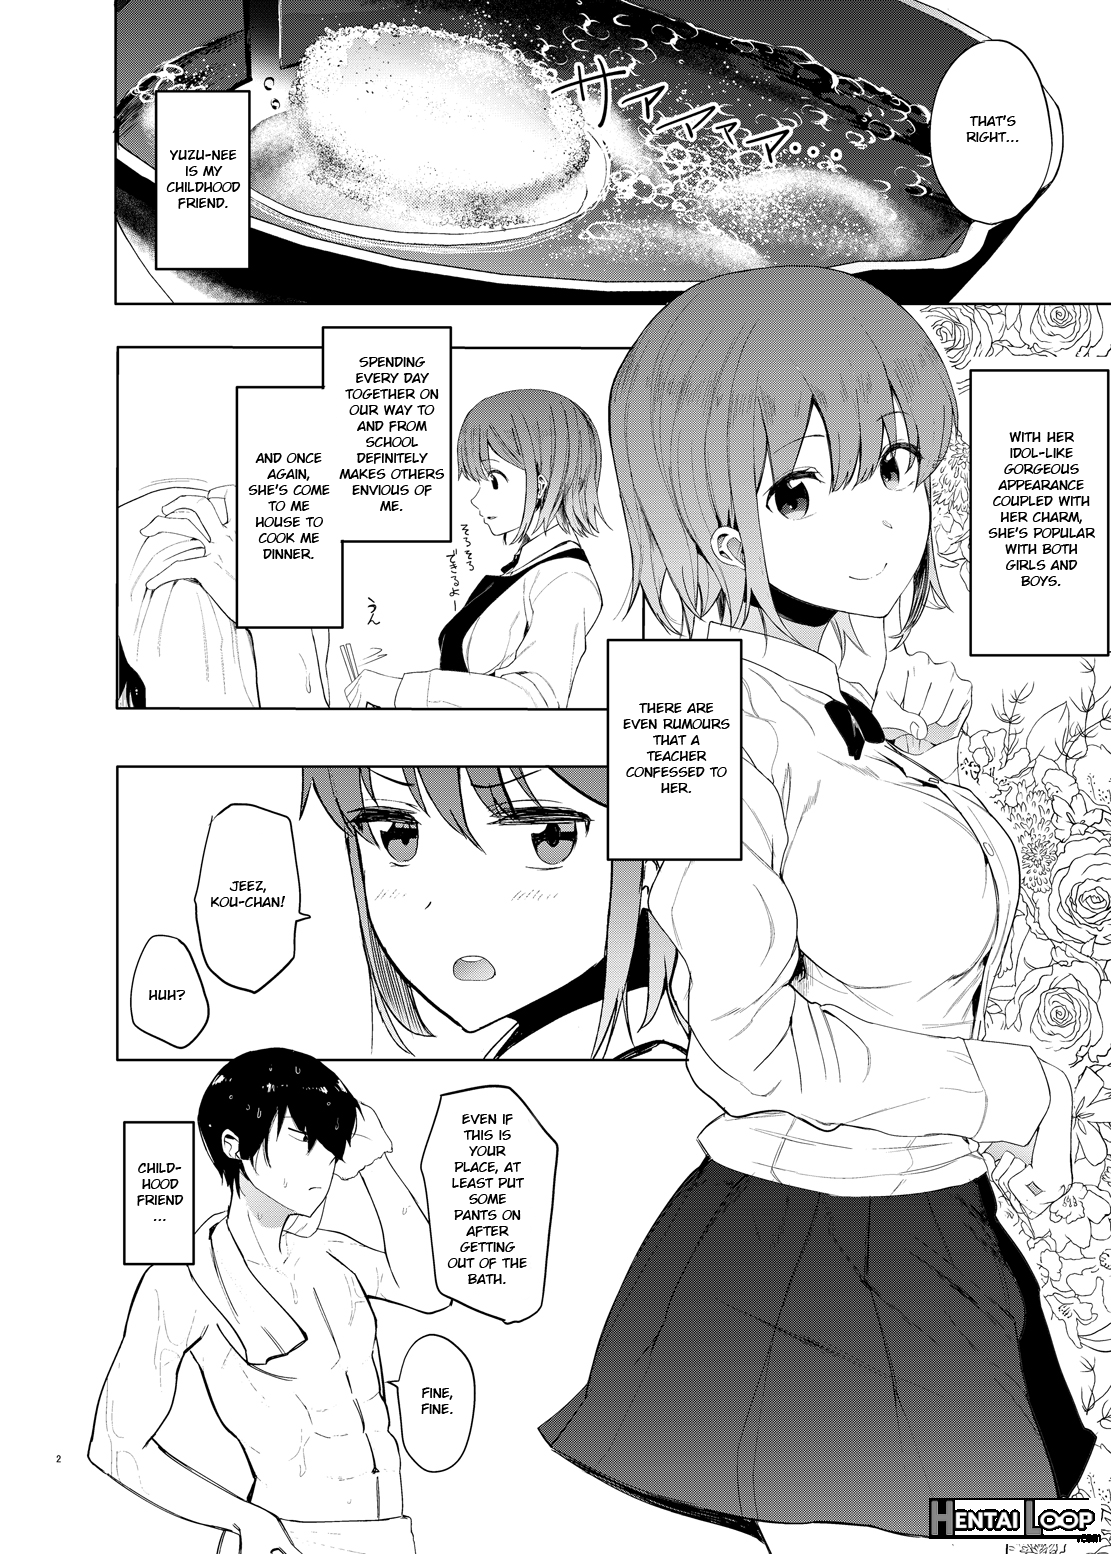 Yuzu-nee page 3